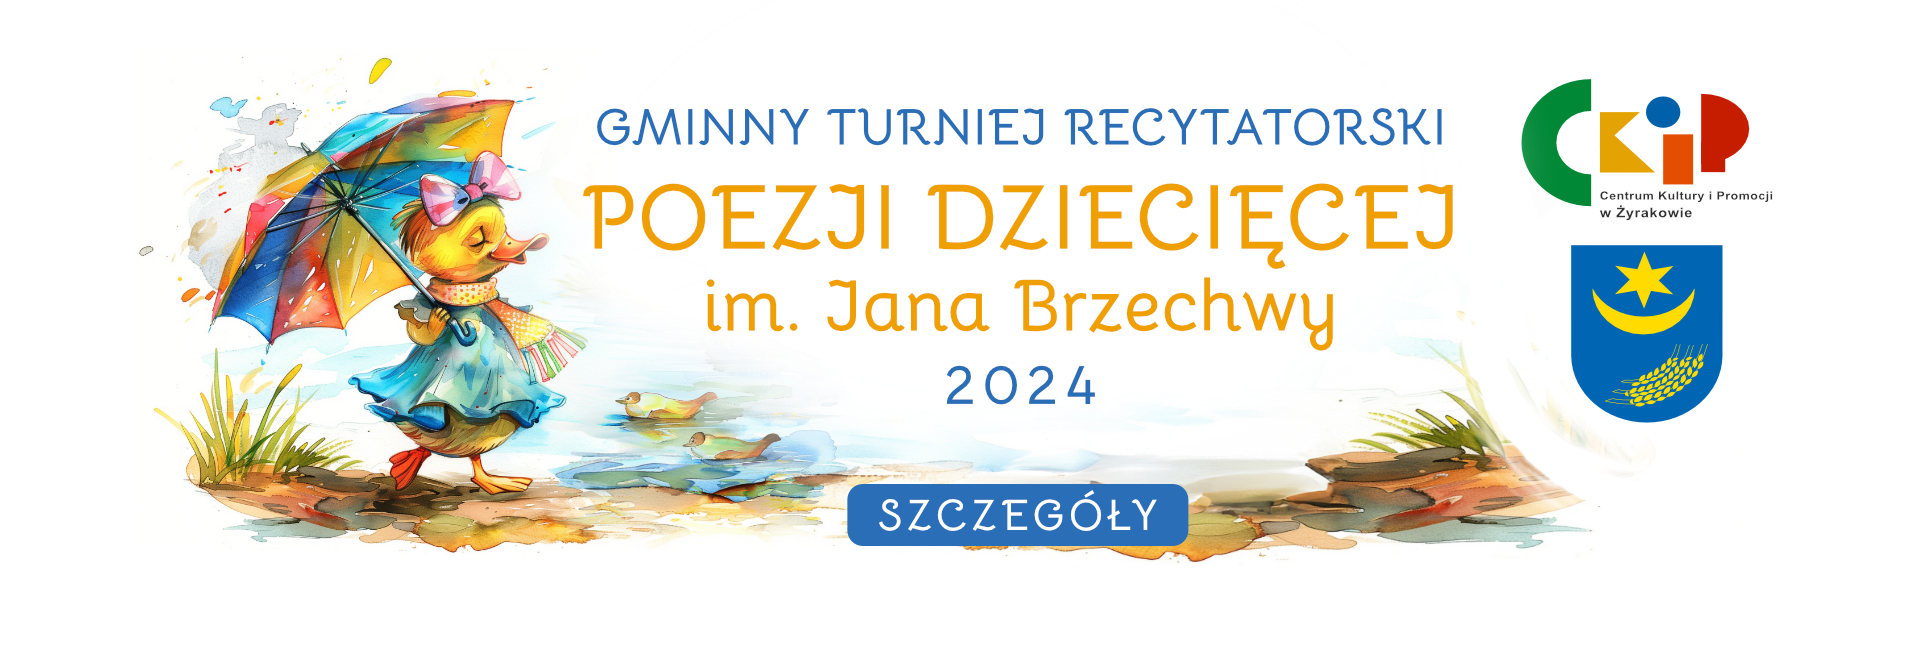 slide brzechwa 2024